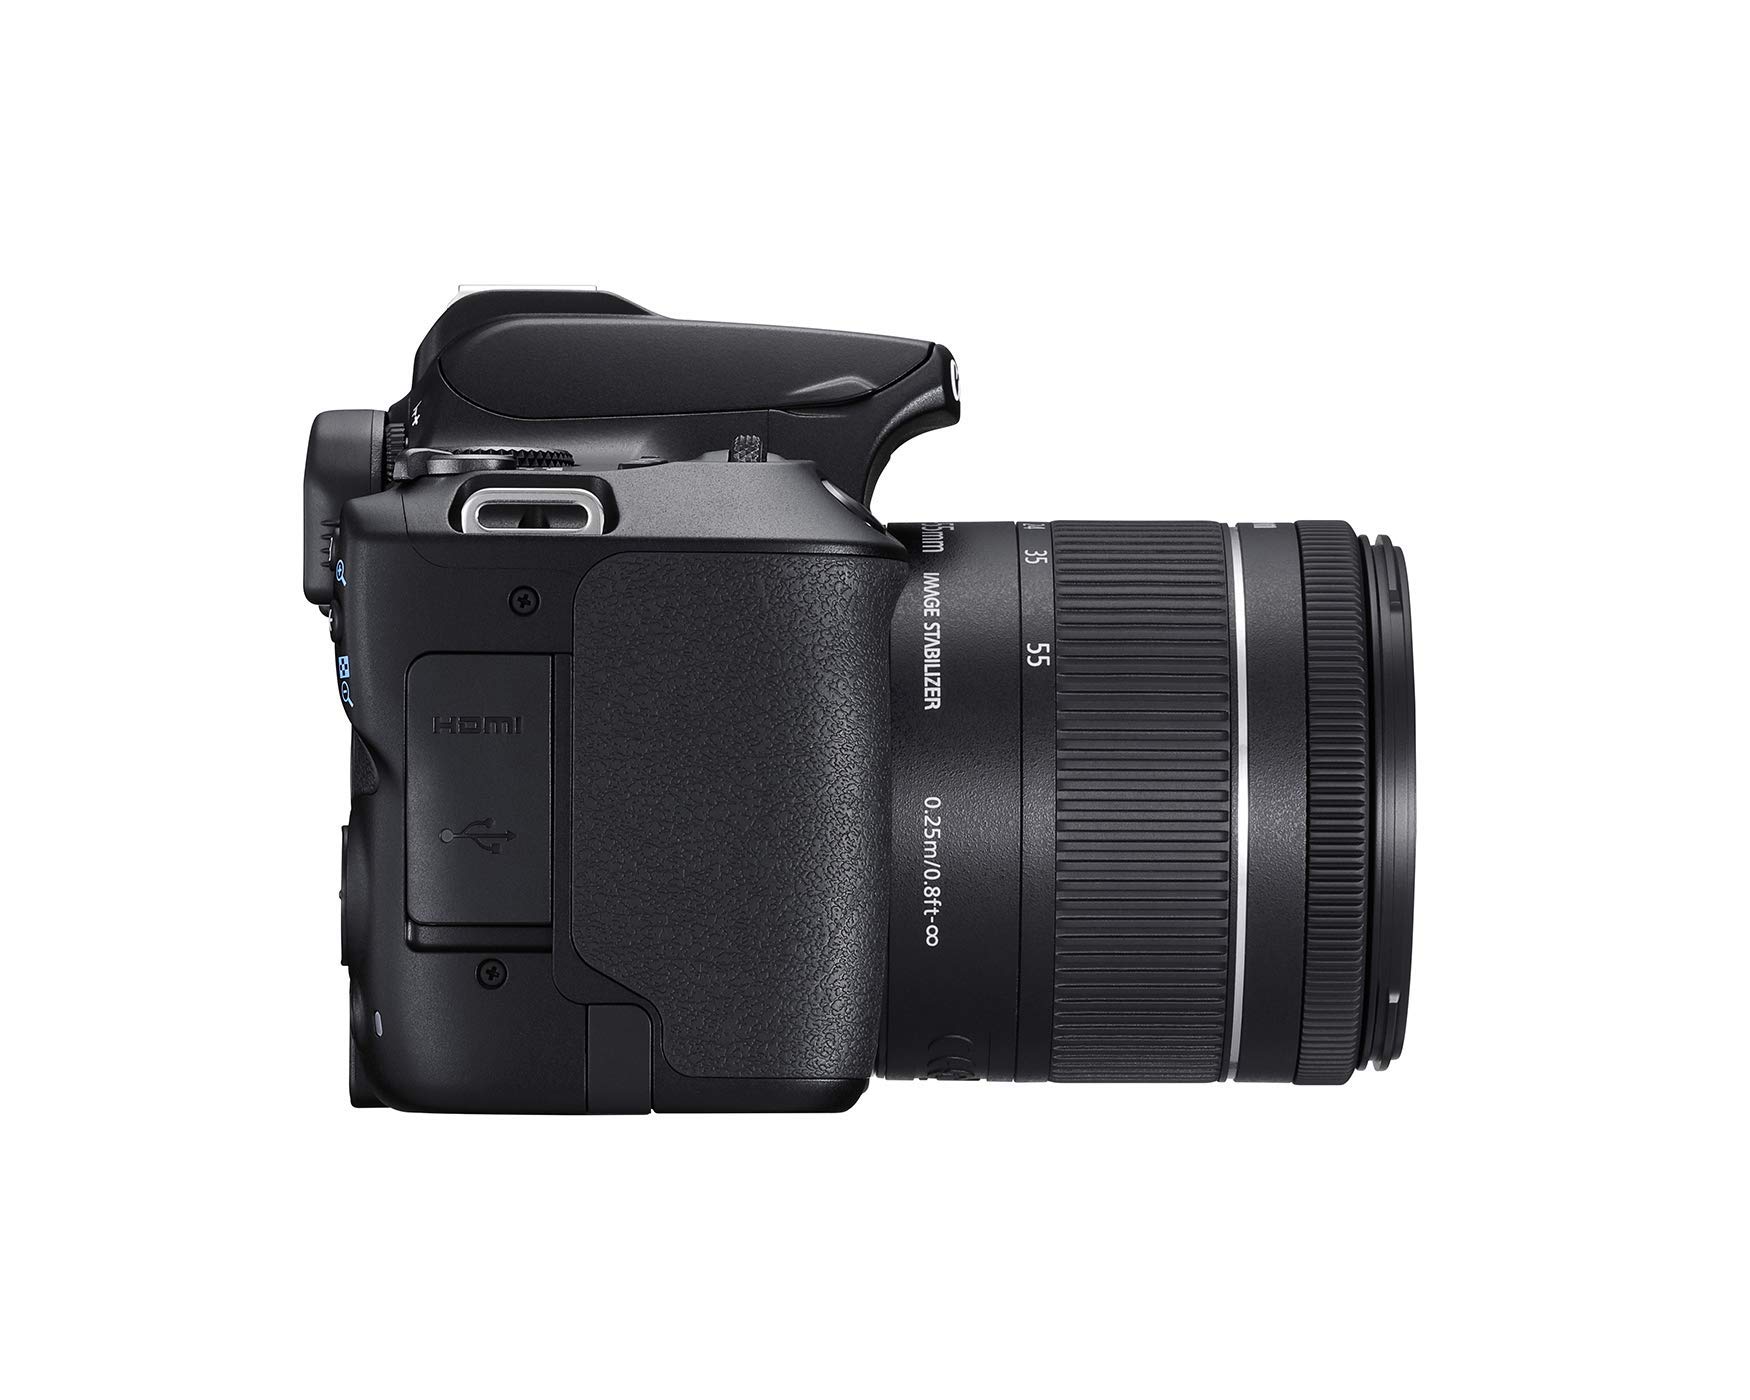 Canon Rebel SL3 with 18-55mm Lens Black (Renewed)